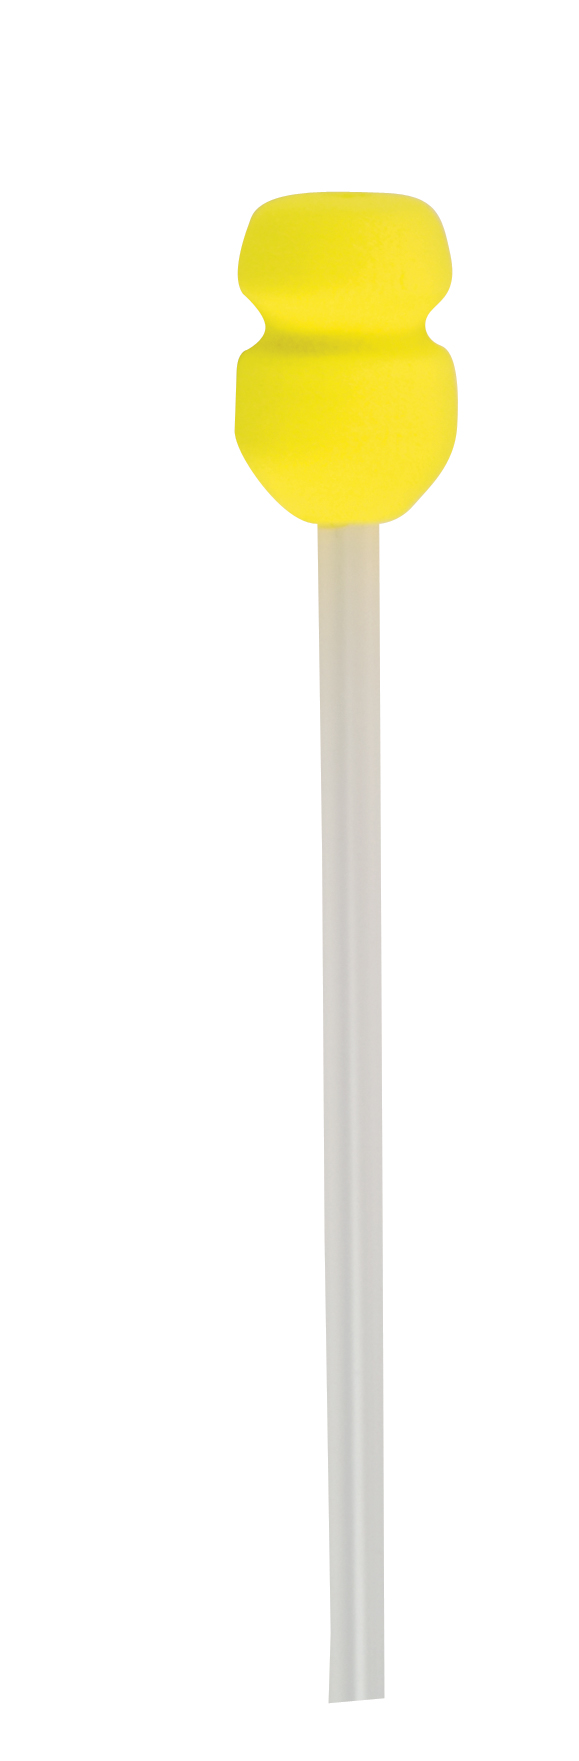 KRUUSE Insemination catheter with handle, yellow foam tip, 100 x 5 pcs